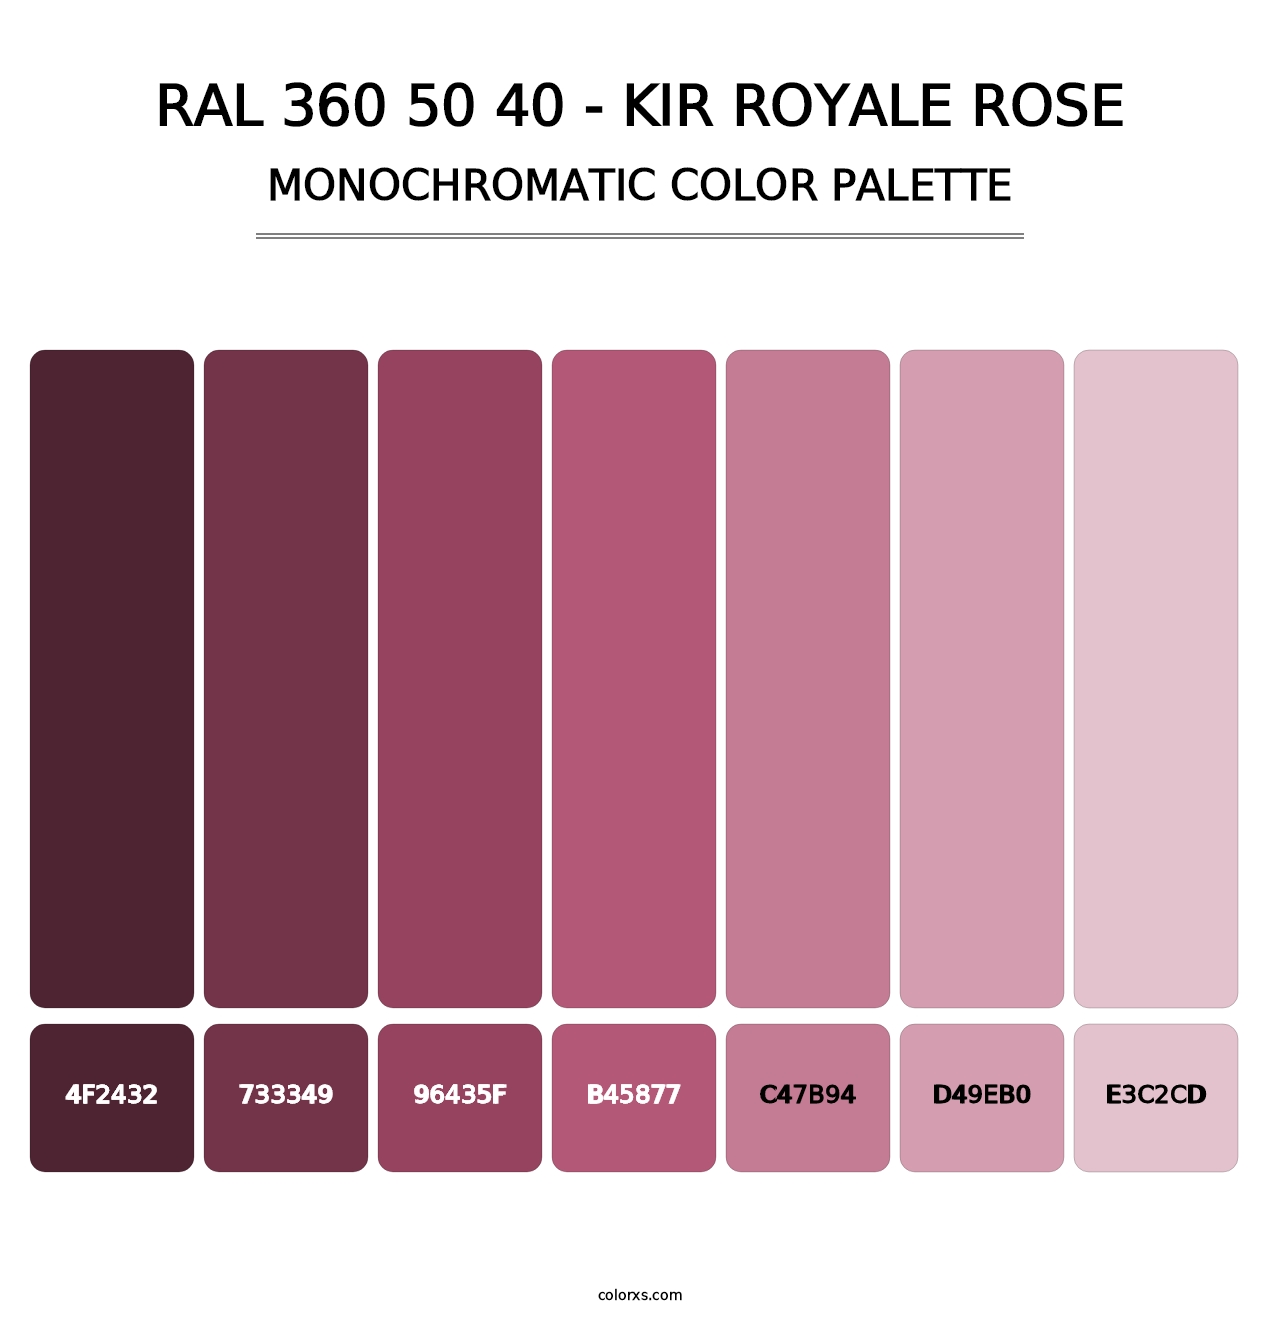 RAL 360 50 40 - Kir Royale Rose - Monochromatic Color Palette